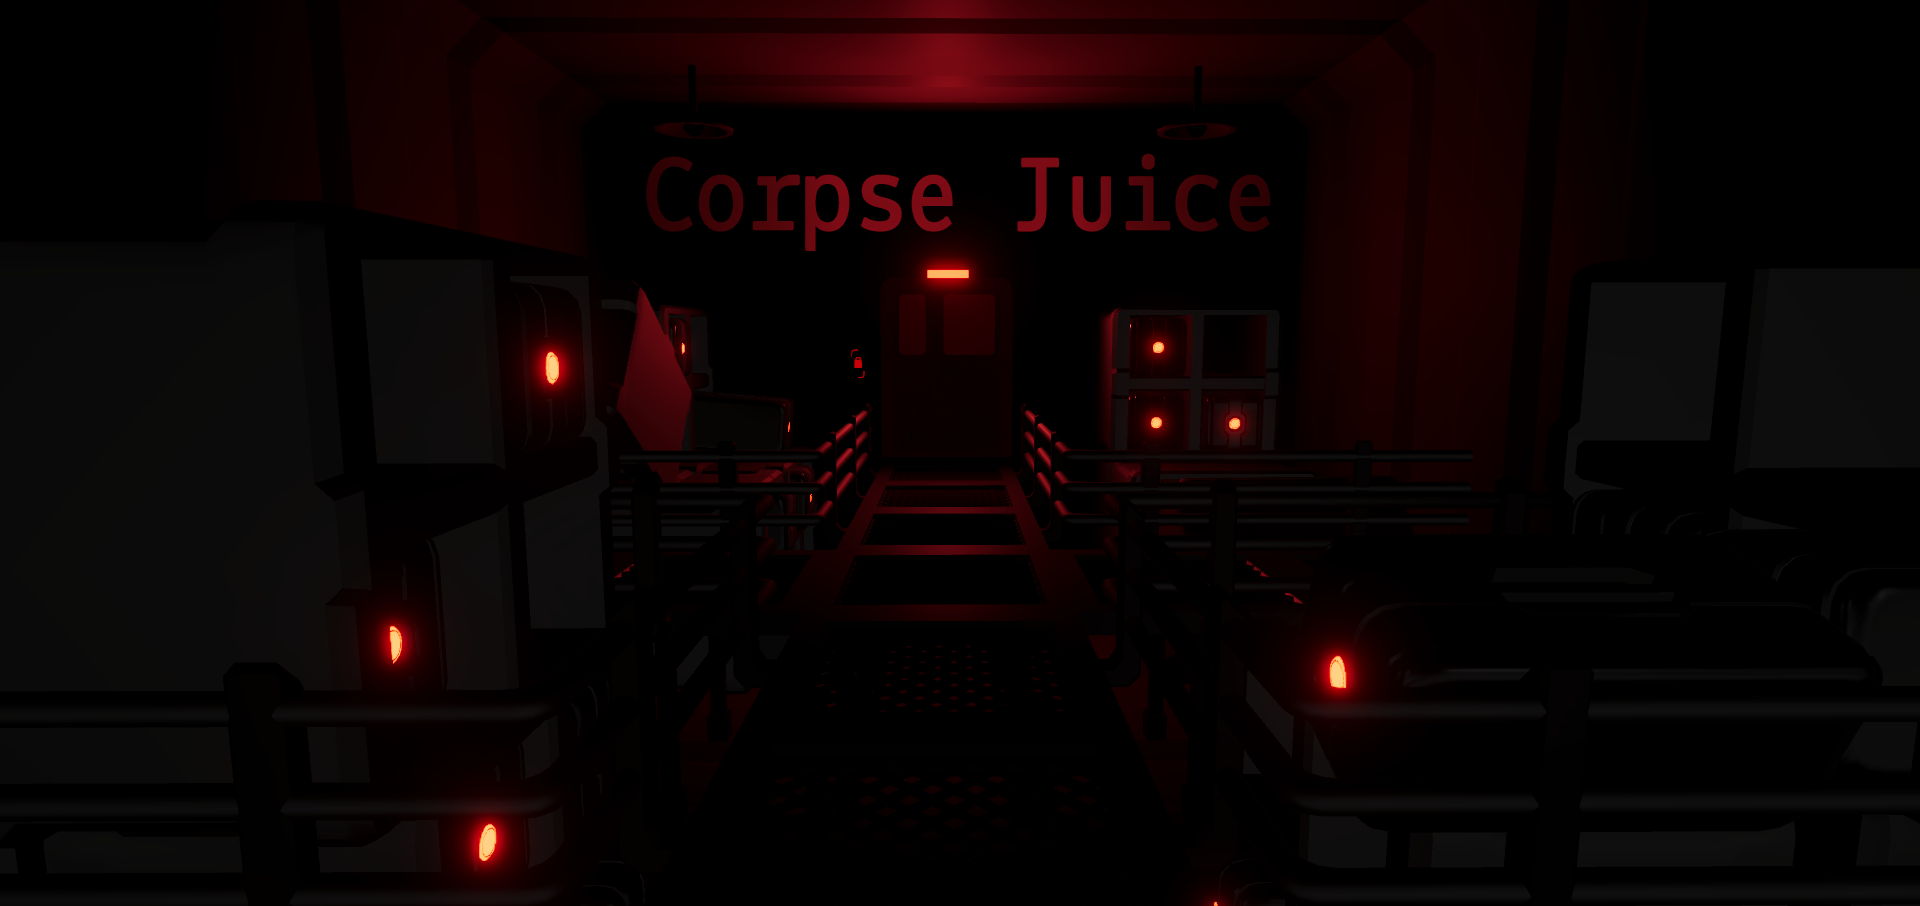 Corpse Juice